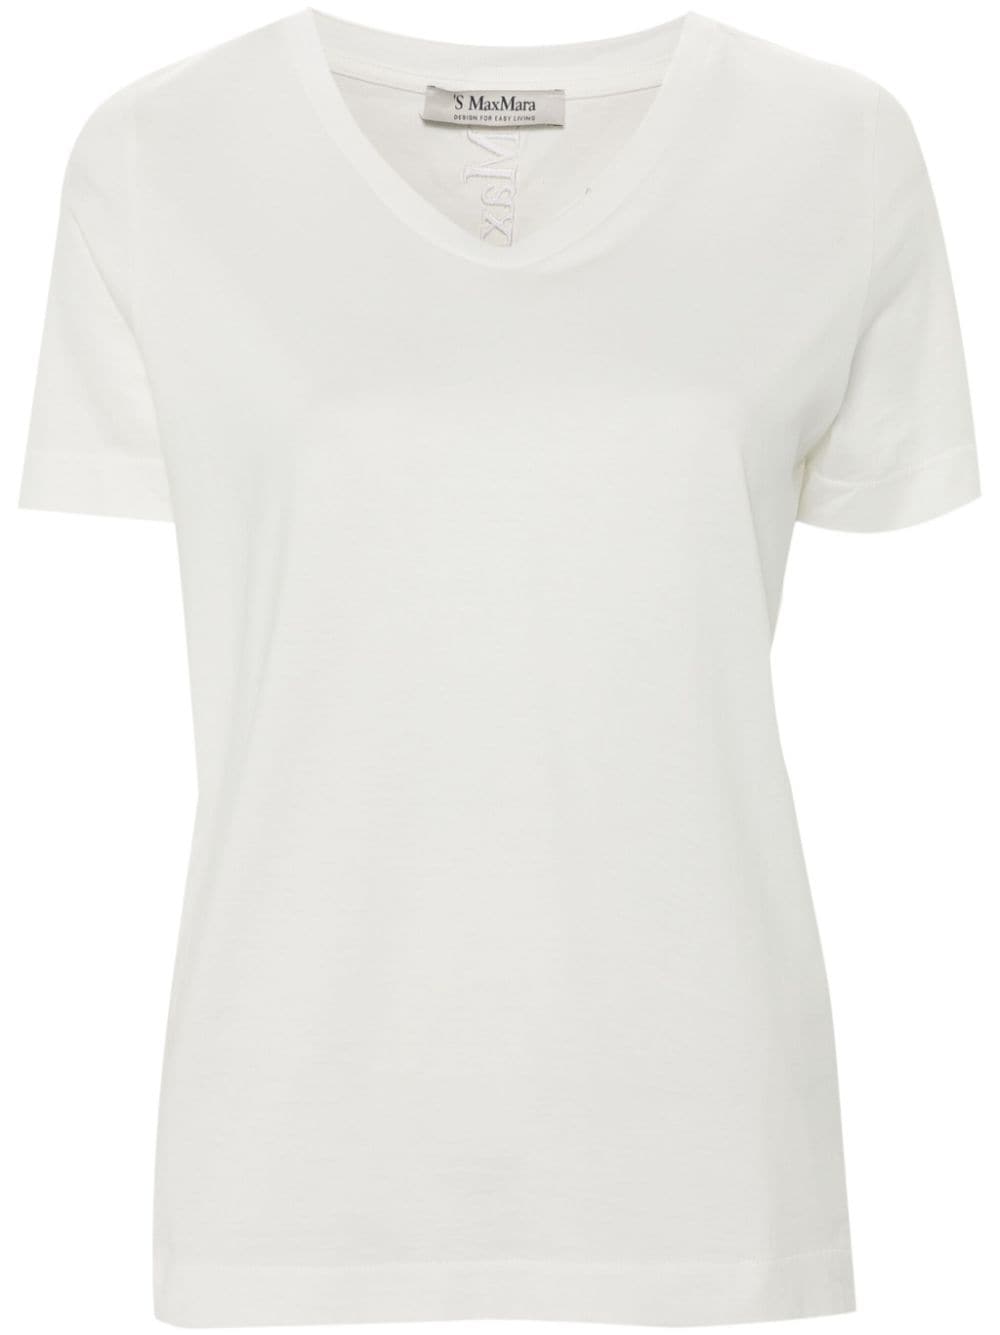 'S Max Mara embroidered-logo cotton T-shirt